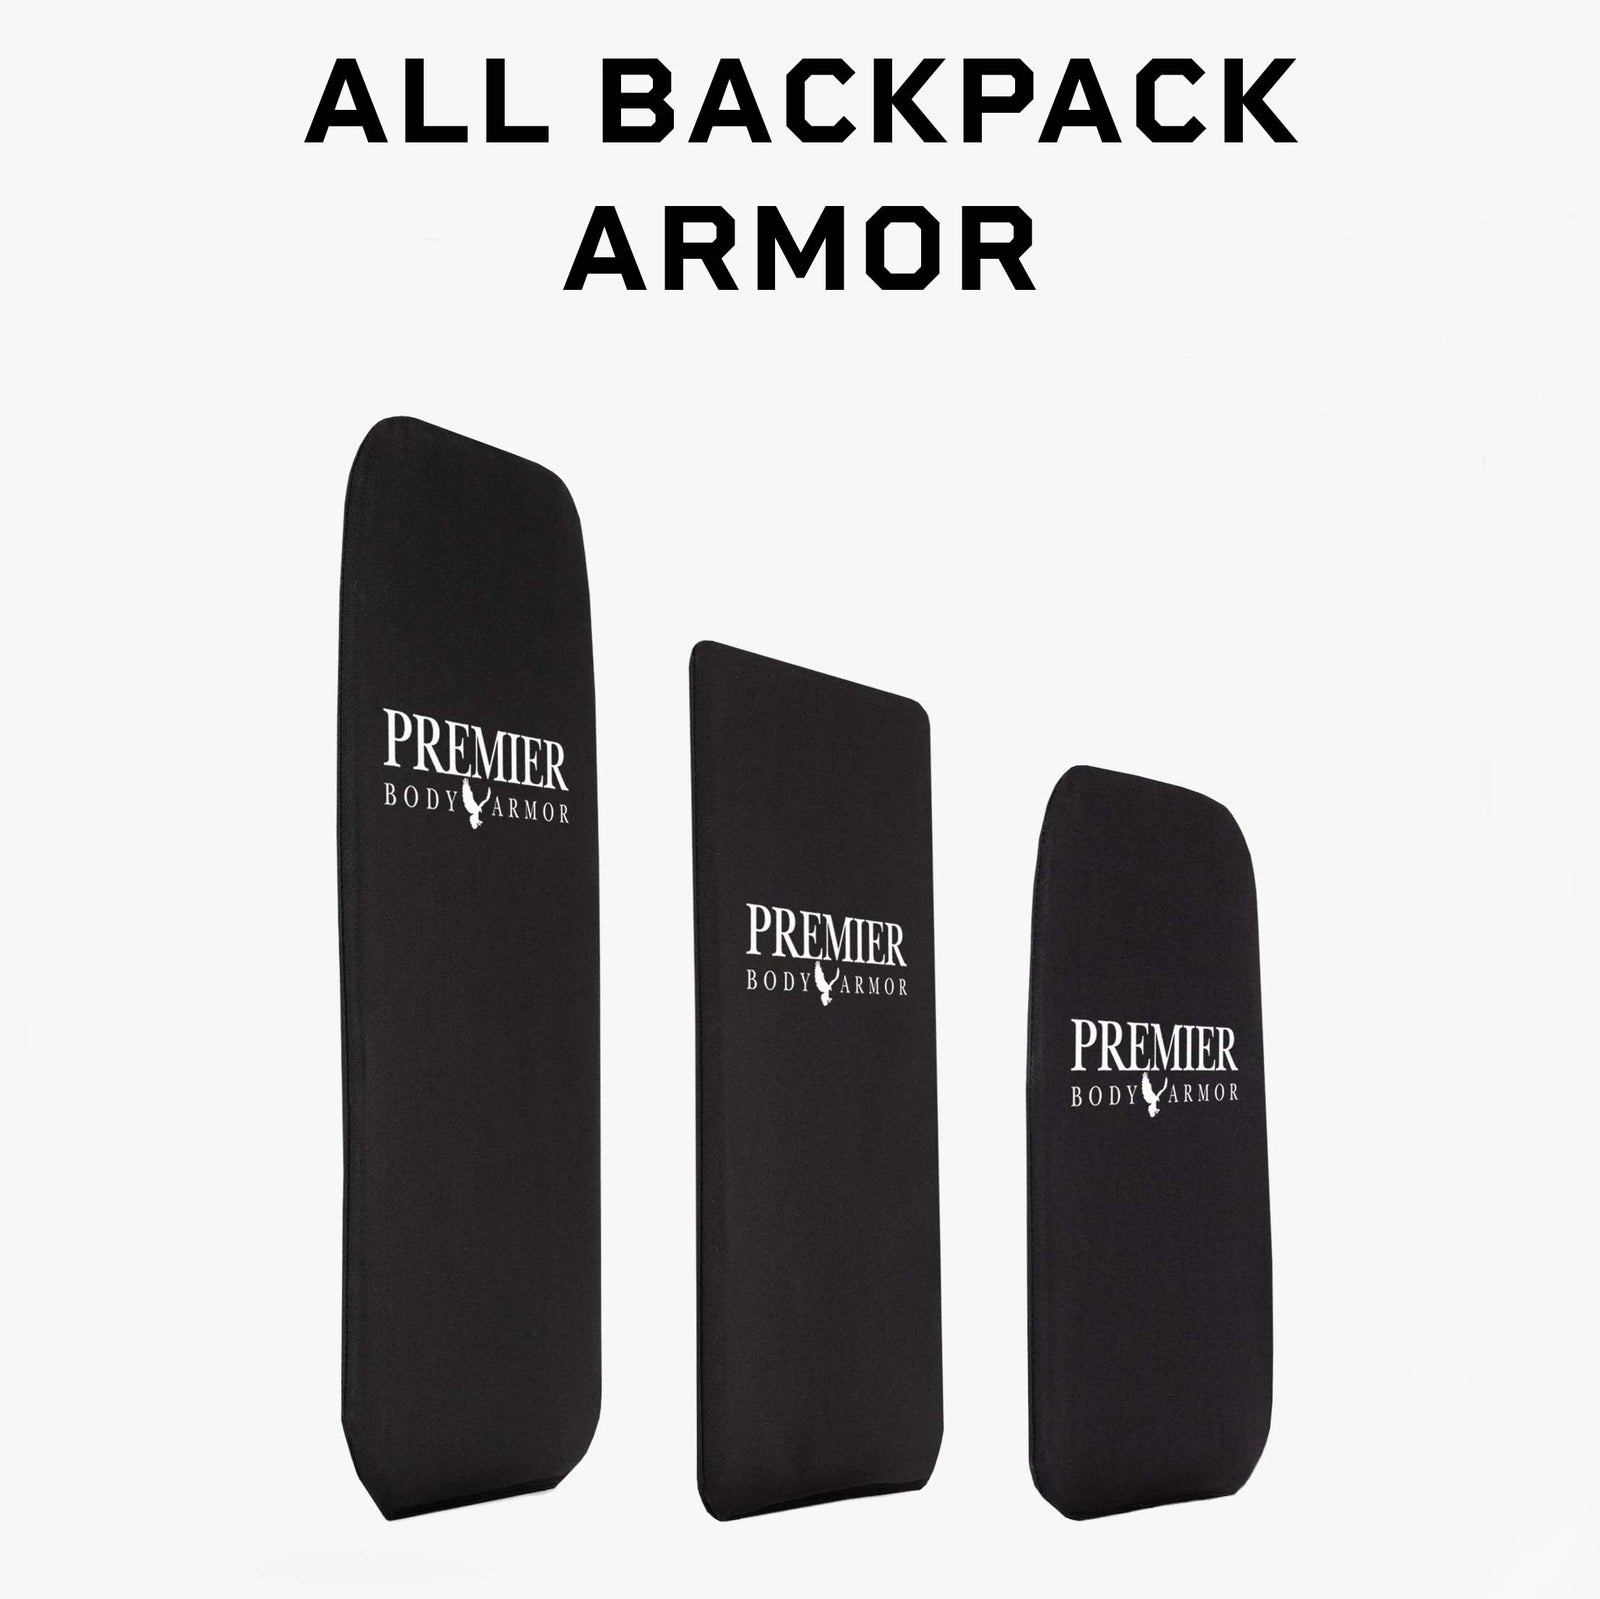 Premier Body Armor: Body Armor & Ballistic Plates